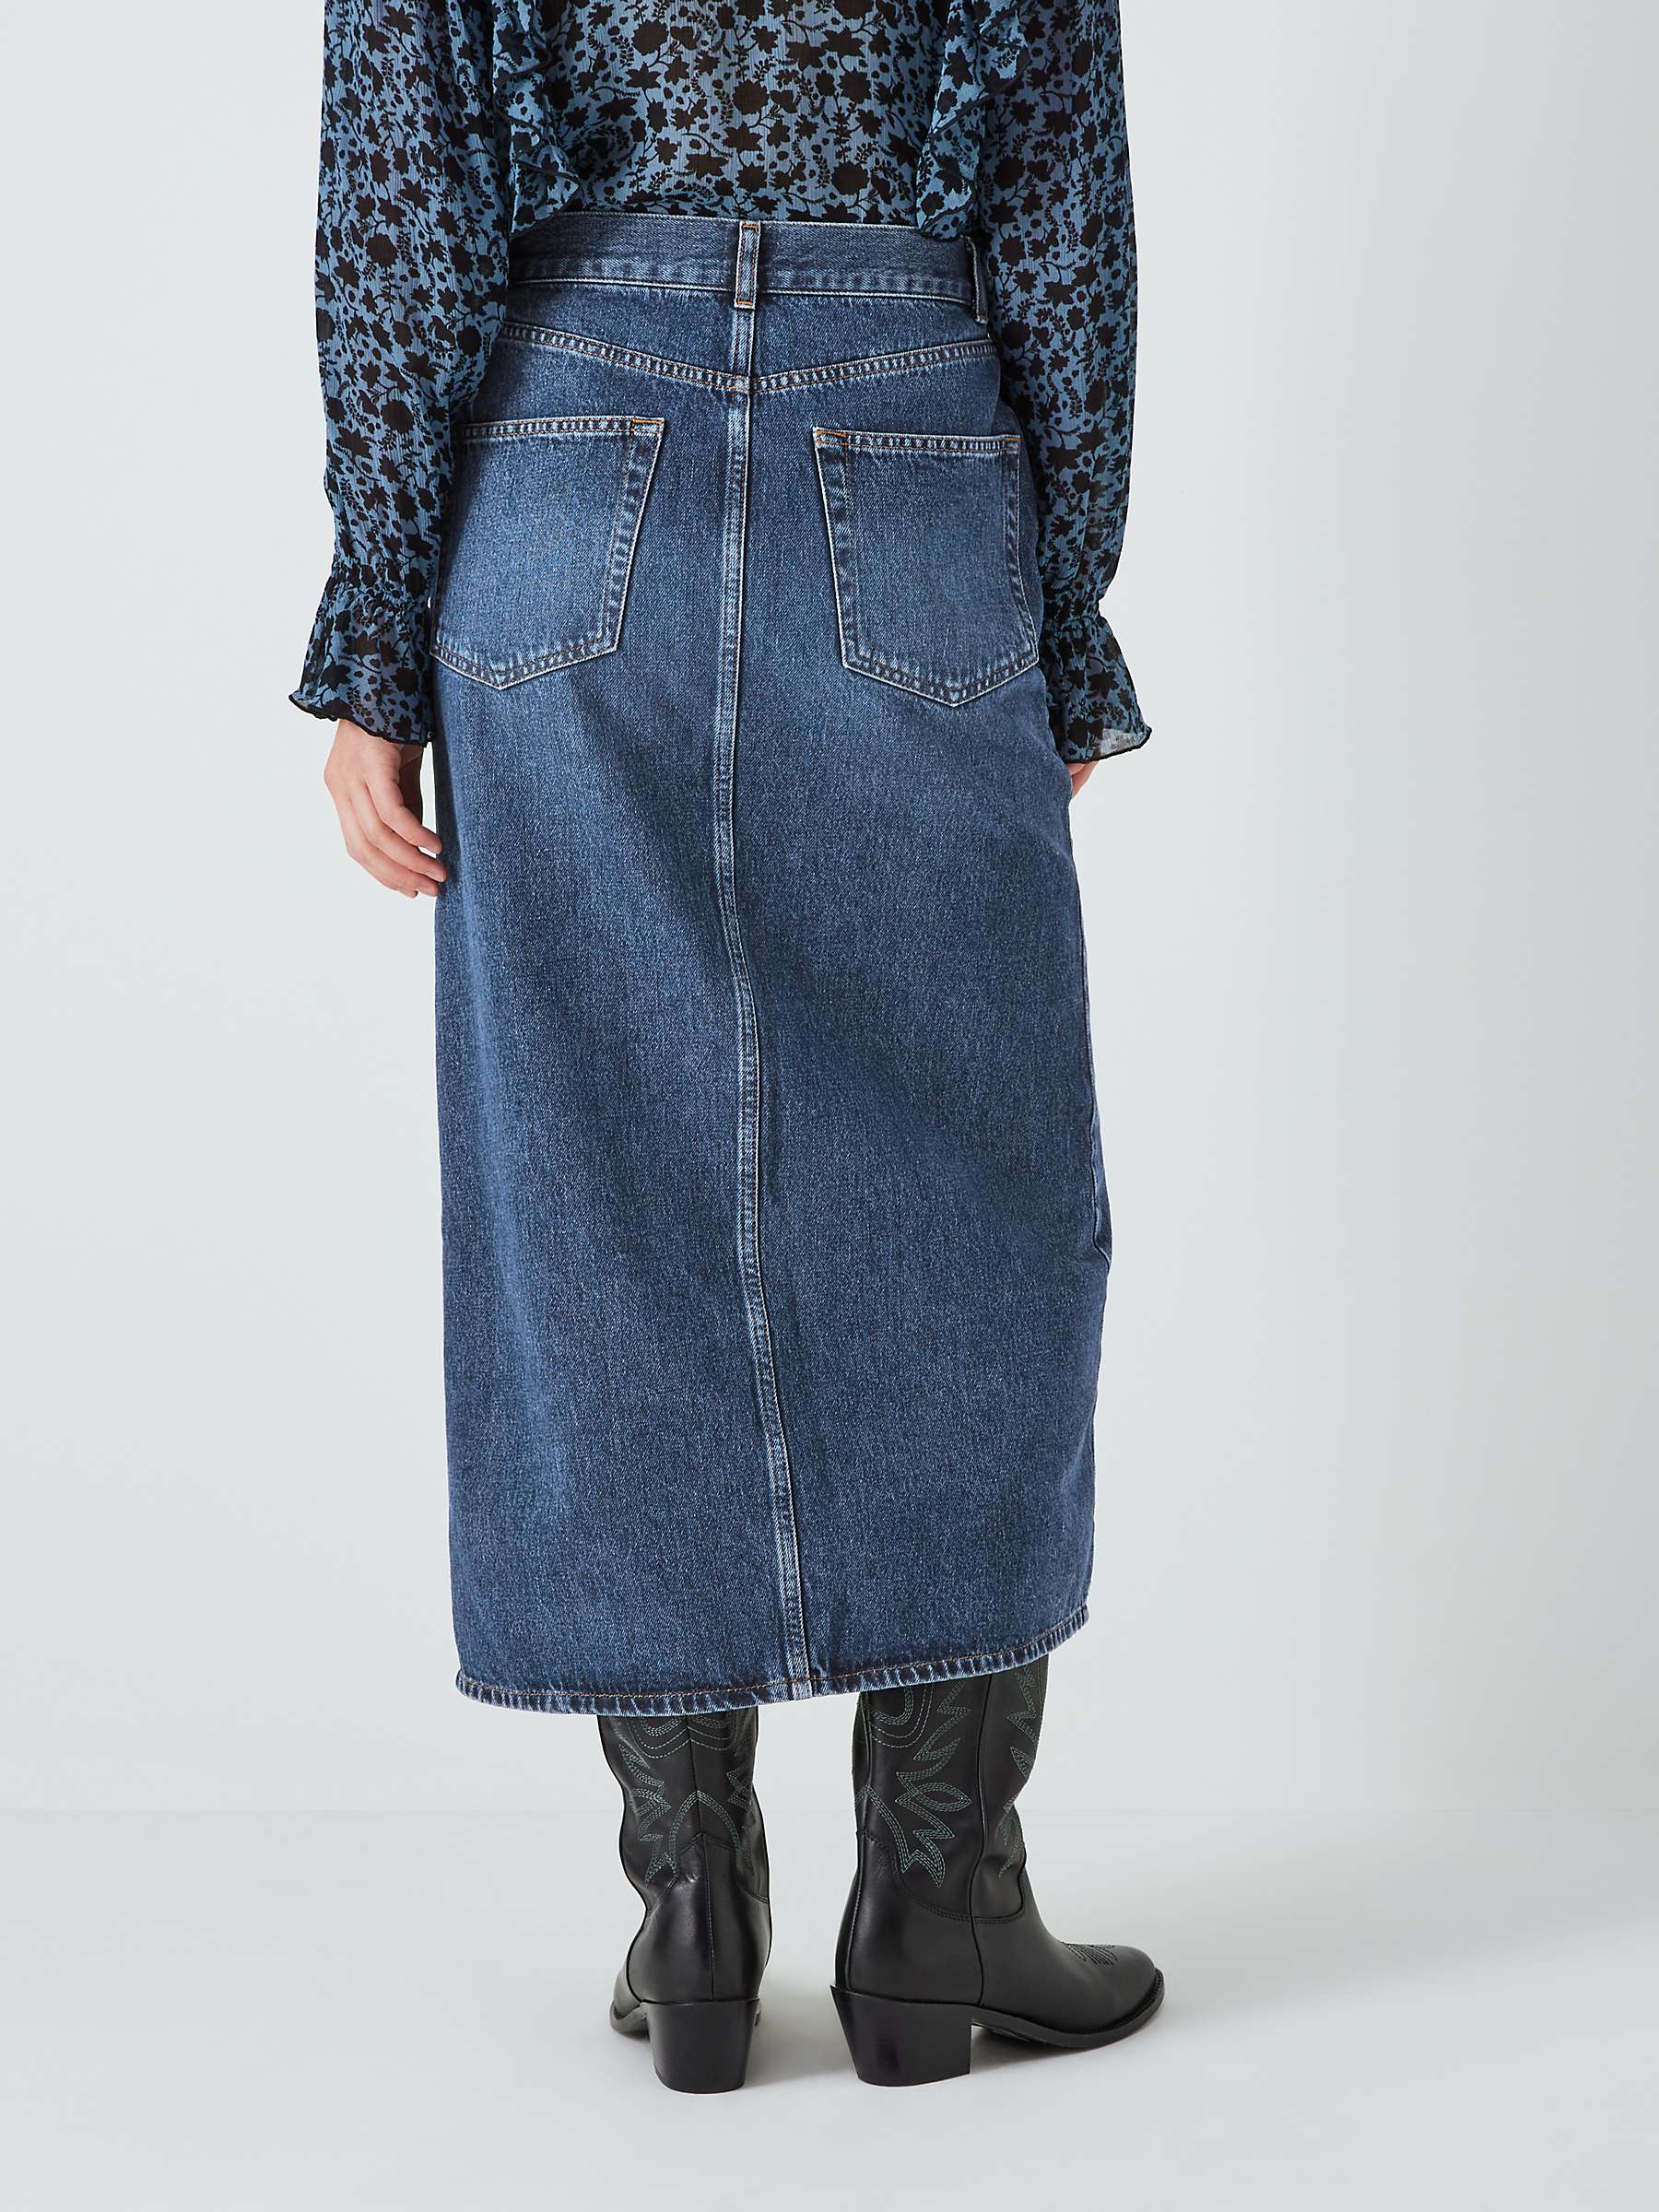 AND/OR Mimi Denim Midi Skirt, Dark Blue Wash at John Lewis & Partners